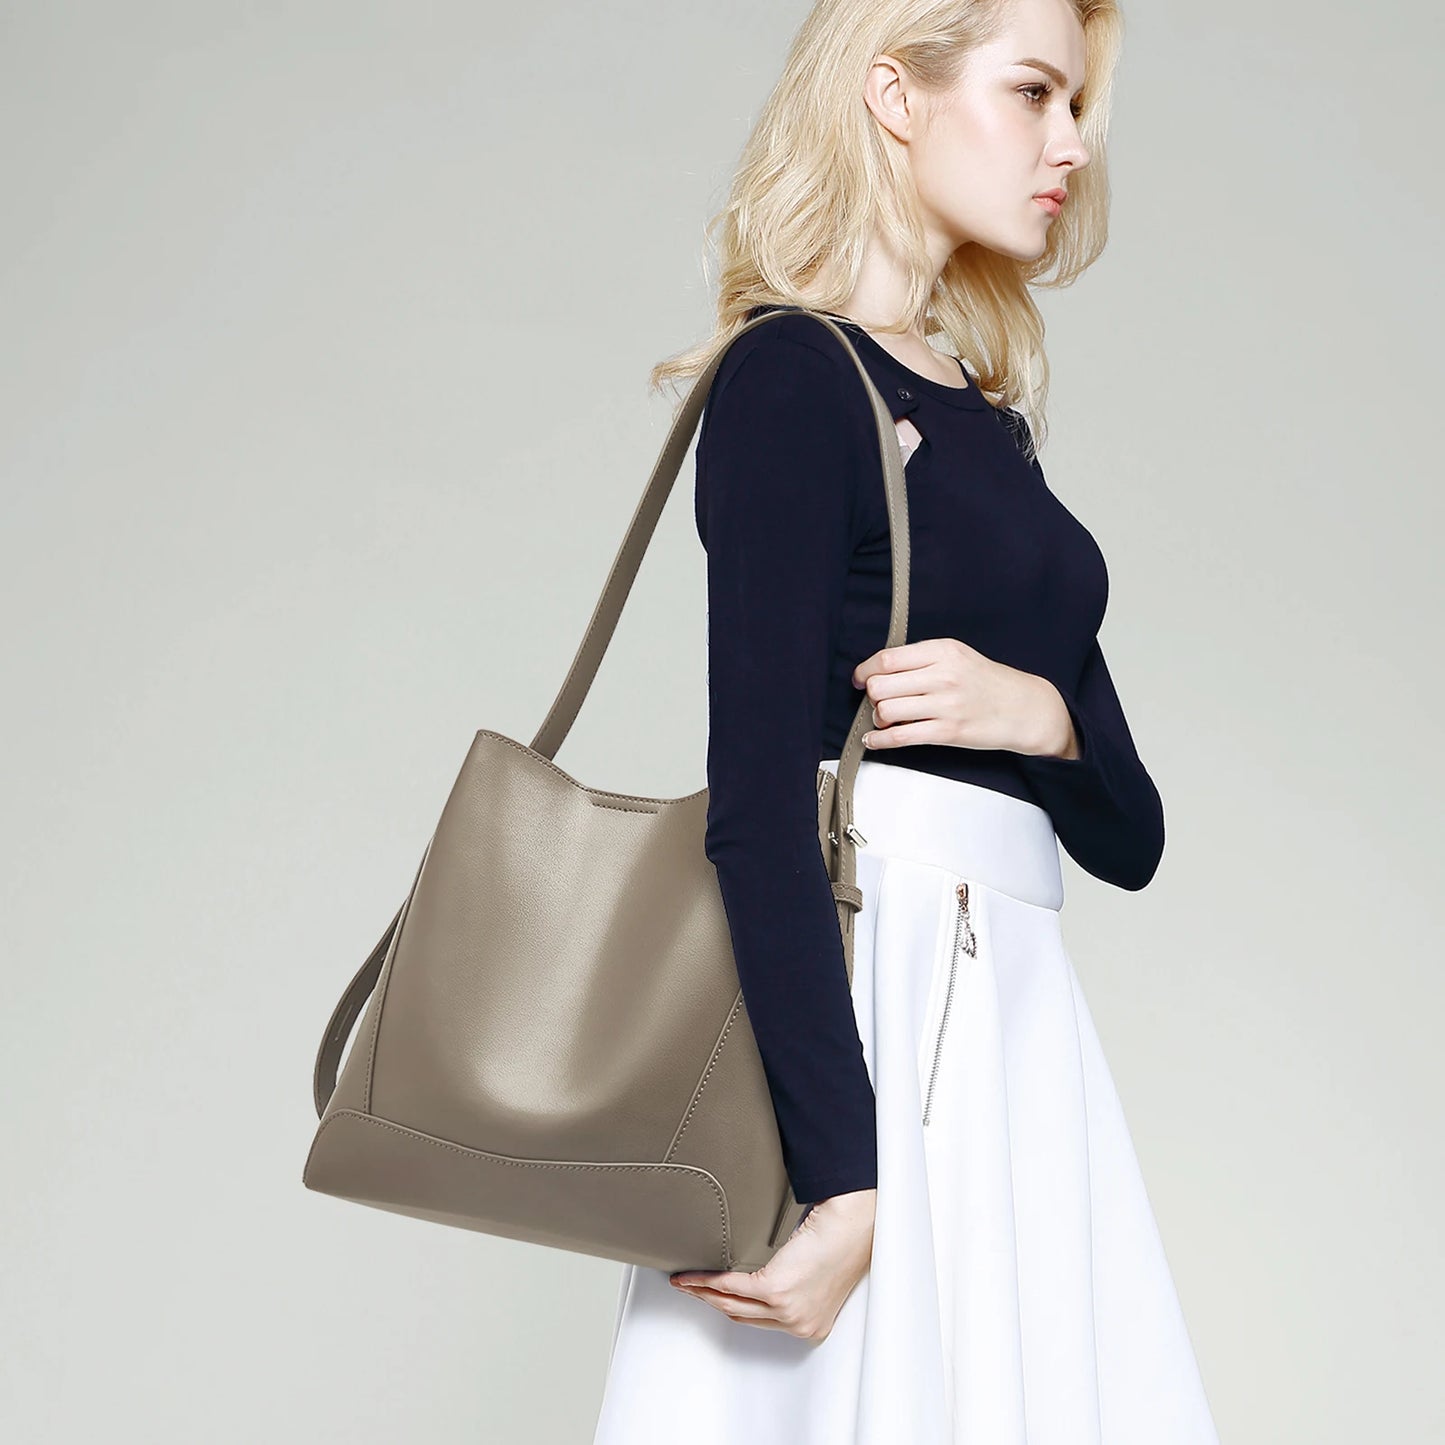 FOXER Lady Fashion Retro Shoulder Bag Large Capacity